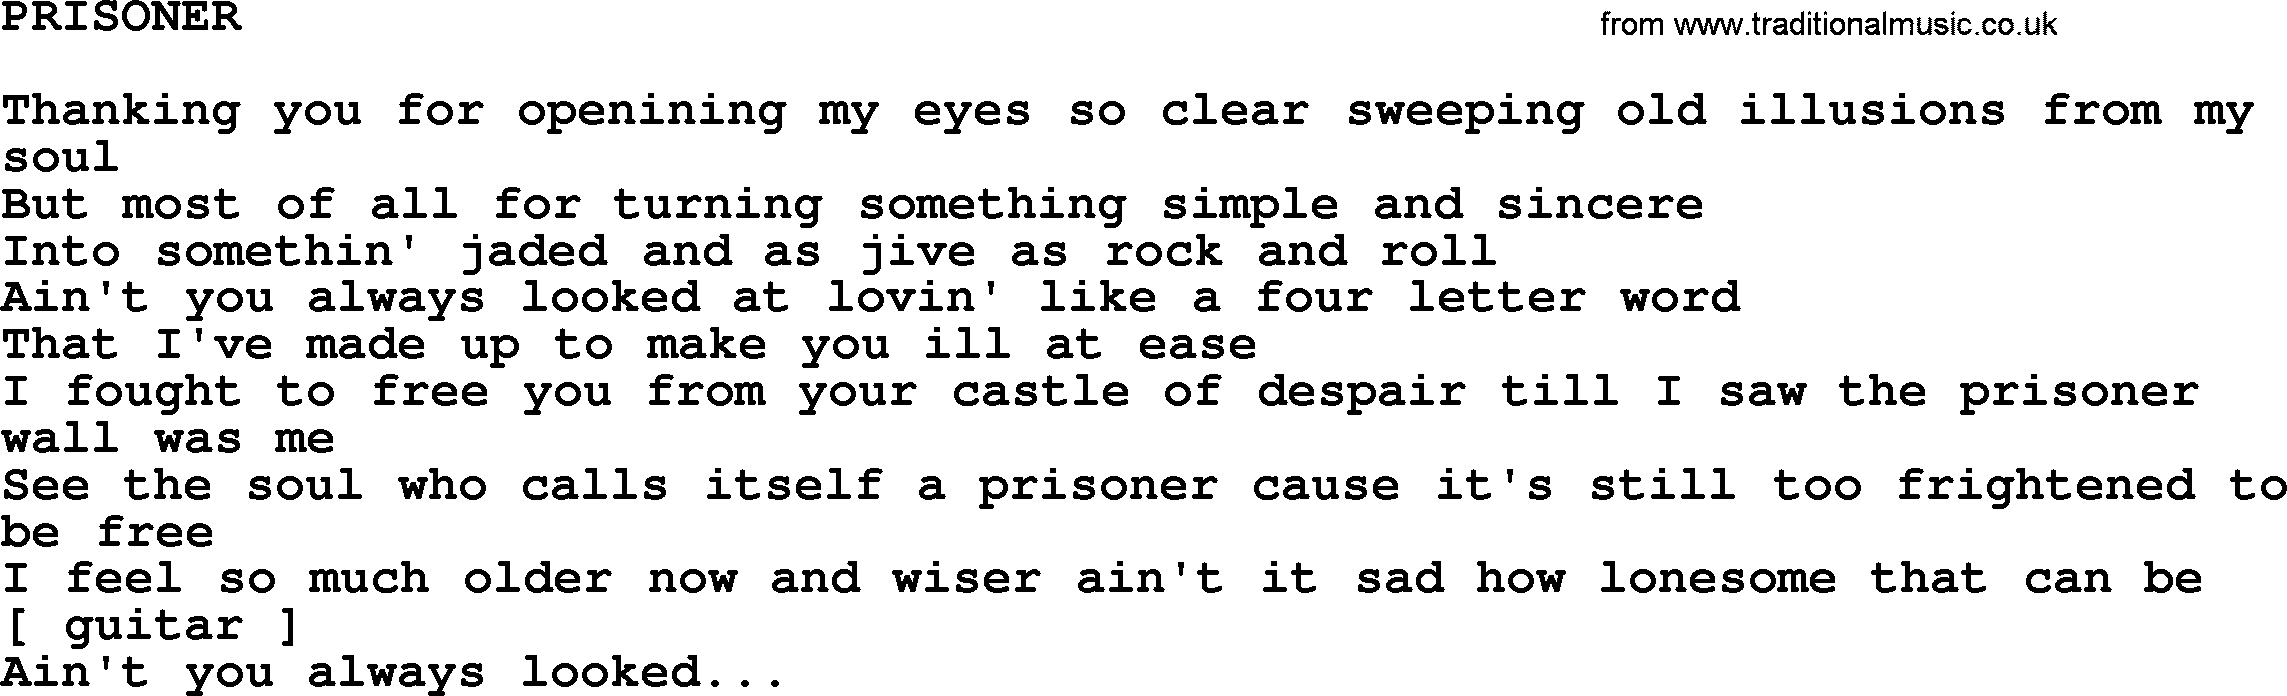 Kris Kristofferson song: Prisoner lyrics